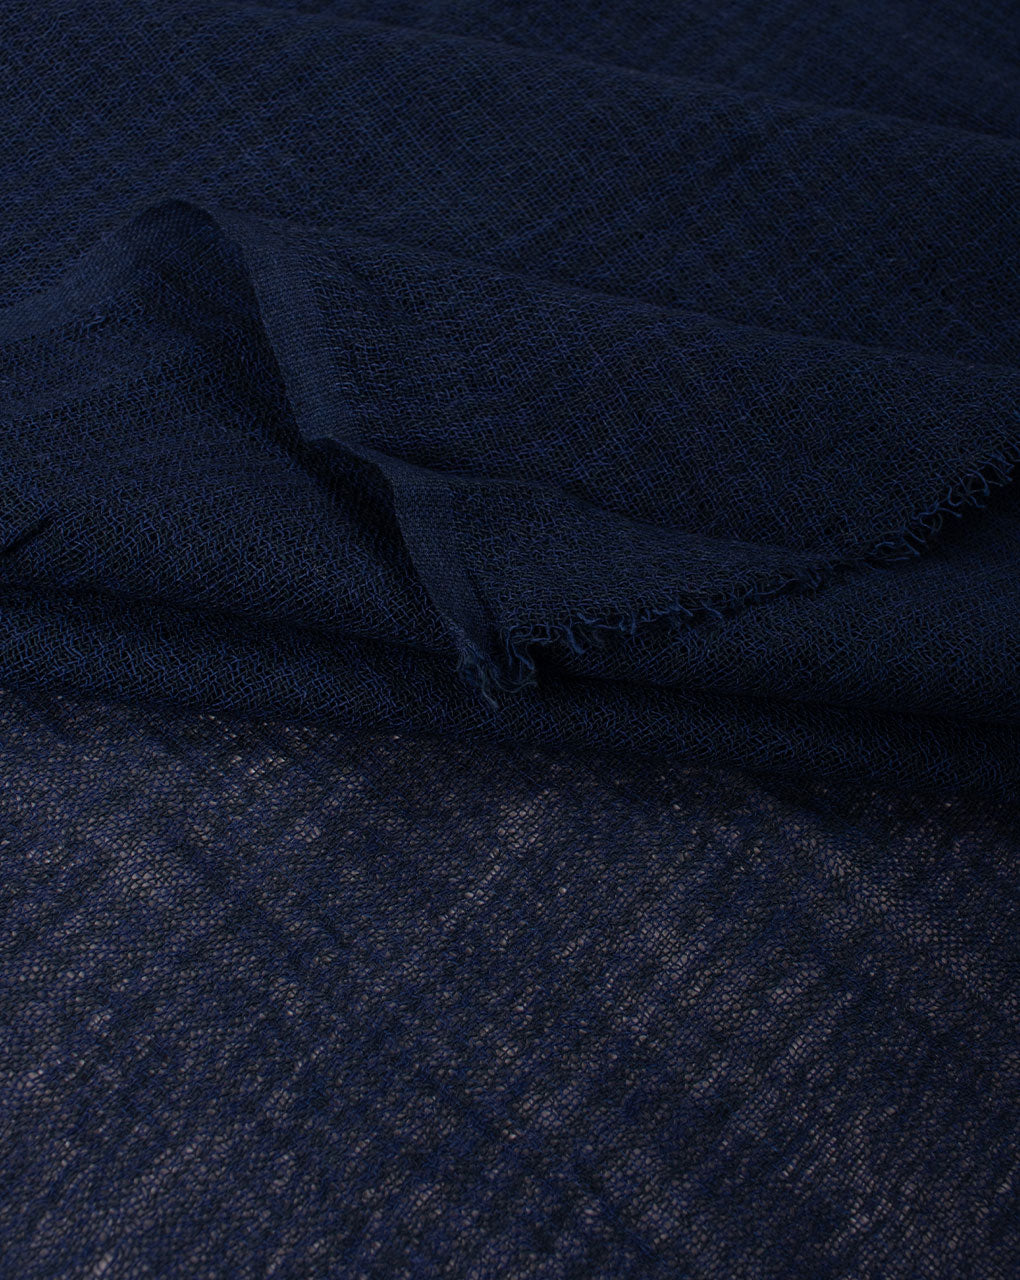 Navy Blue Plain Woven Bhagalpuri Cotton Stole - Fabriclore.com